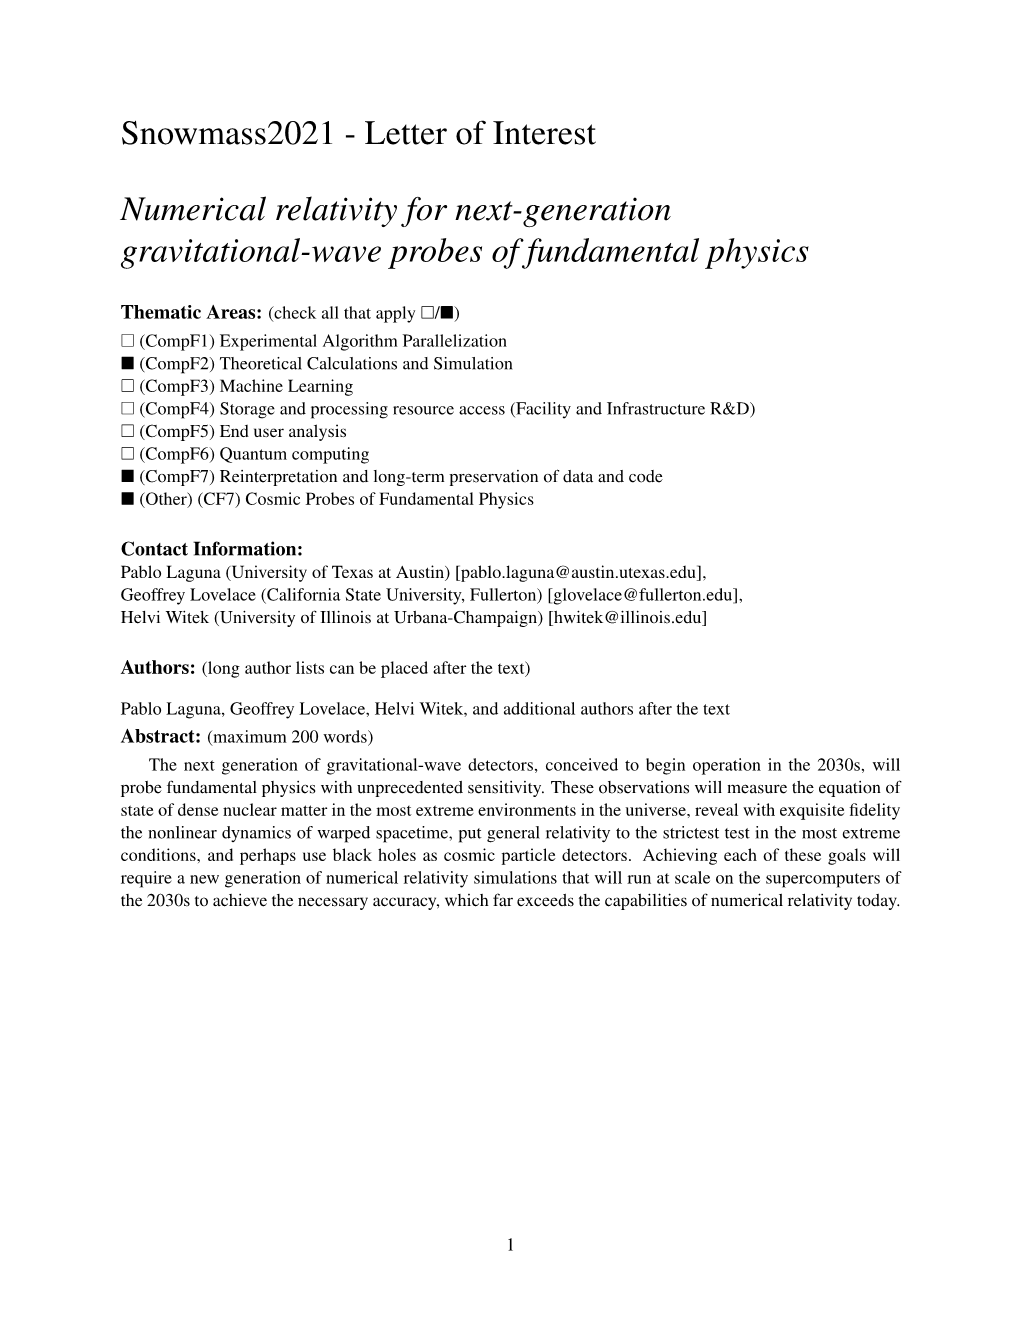 Letter of Interest Numerical Relativity for Next-Generation Gravitational